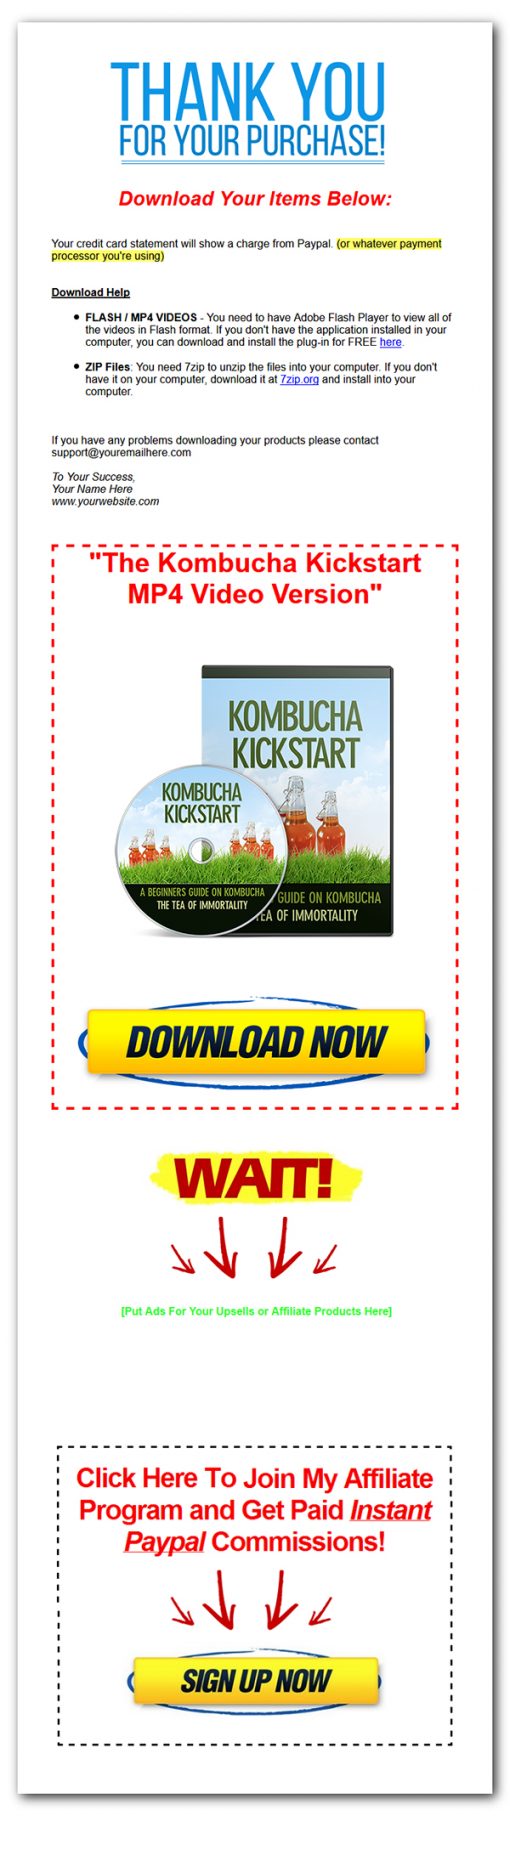 Kombucha Kickstart Ebook and Videos MRR